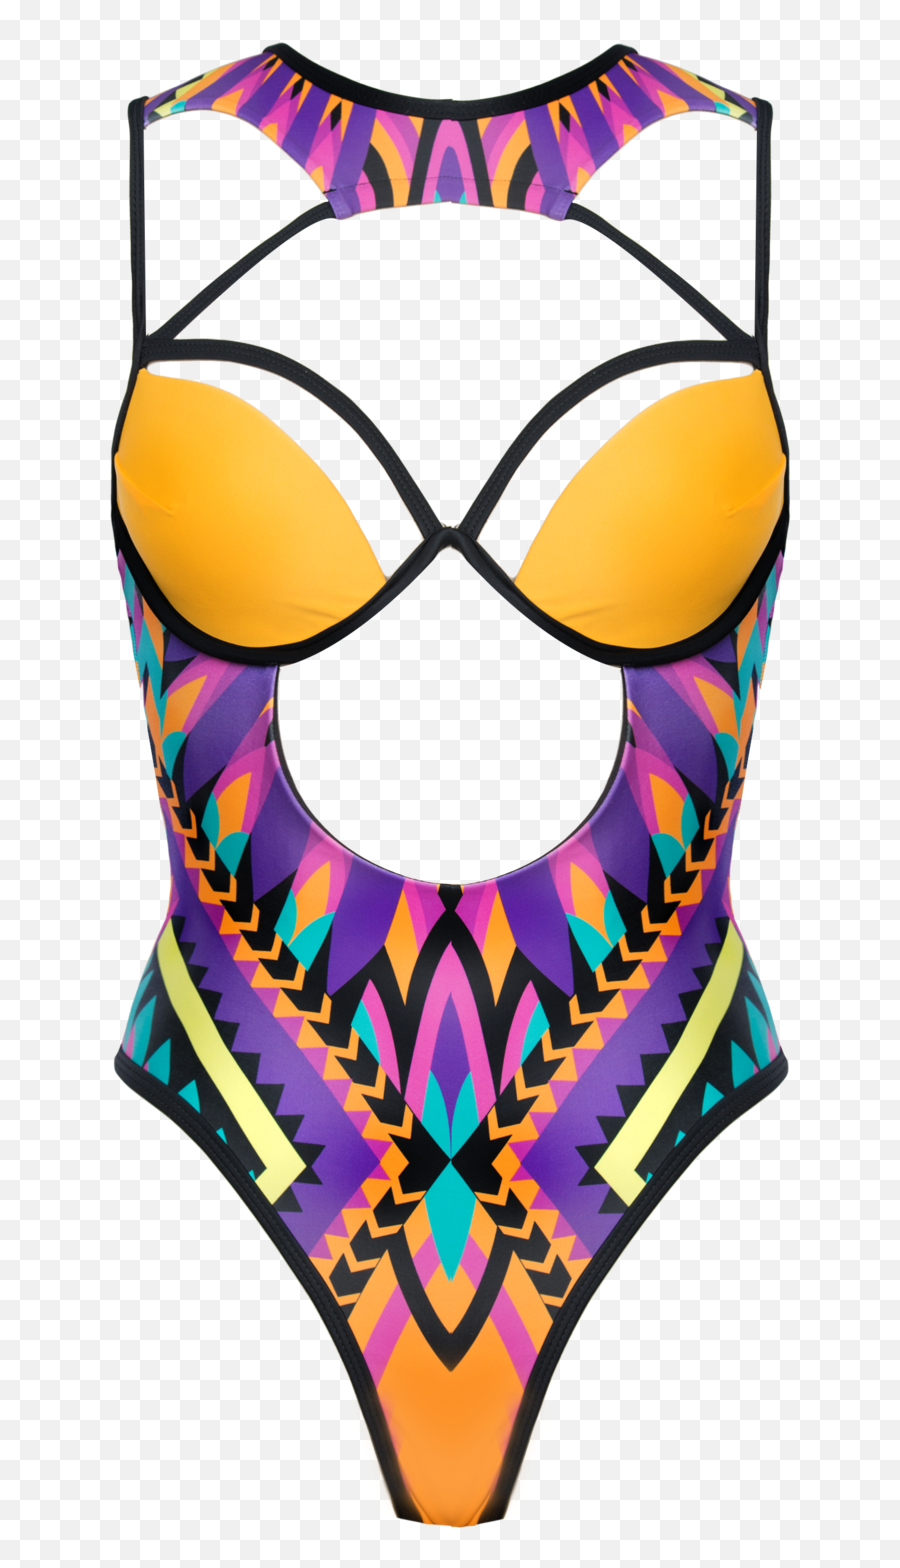 One - Swimsuit Emoji,Swimsuit Clipart